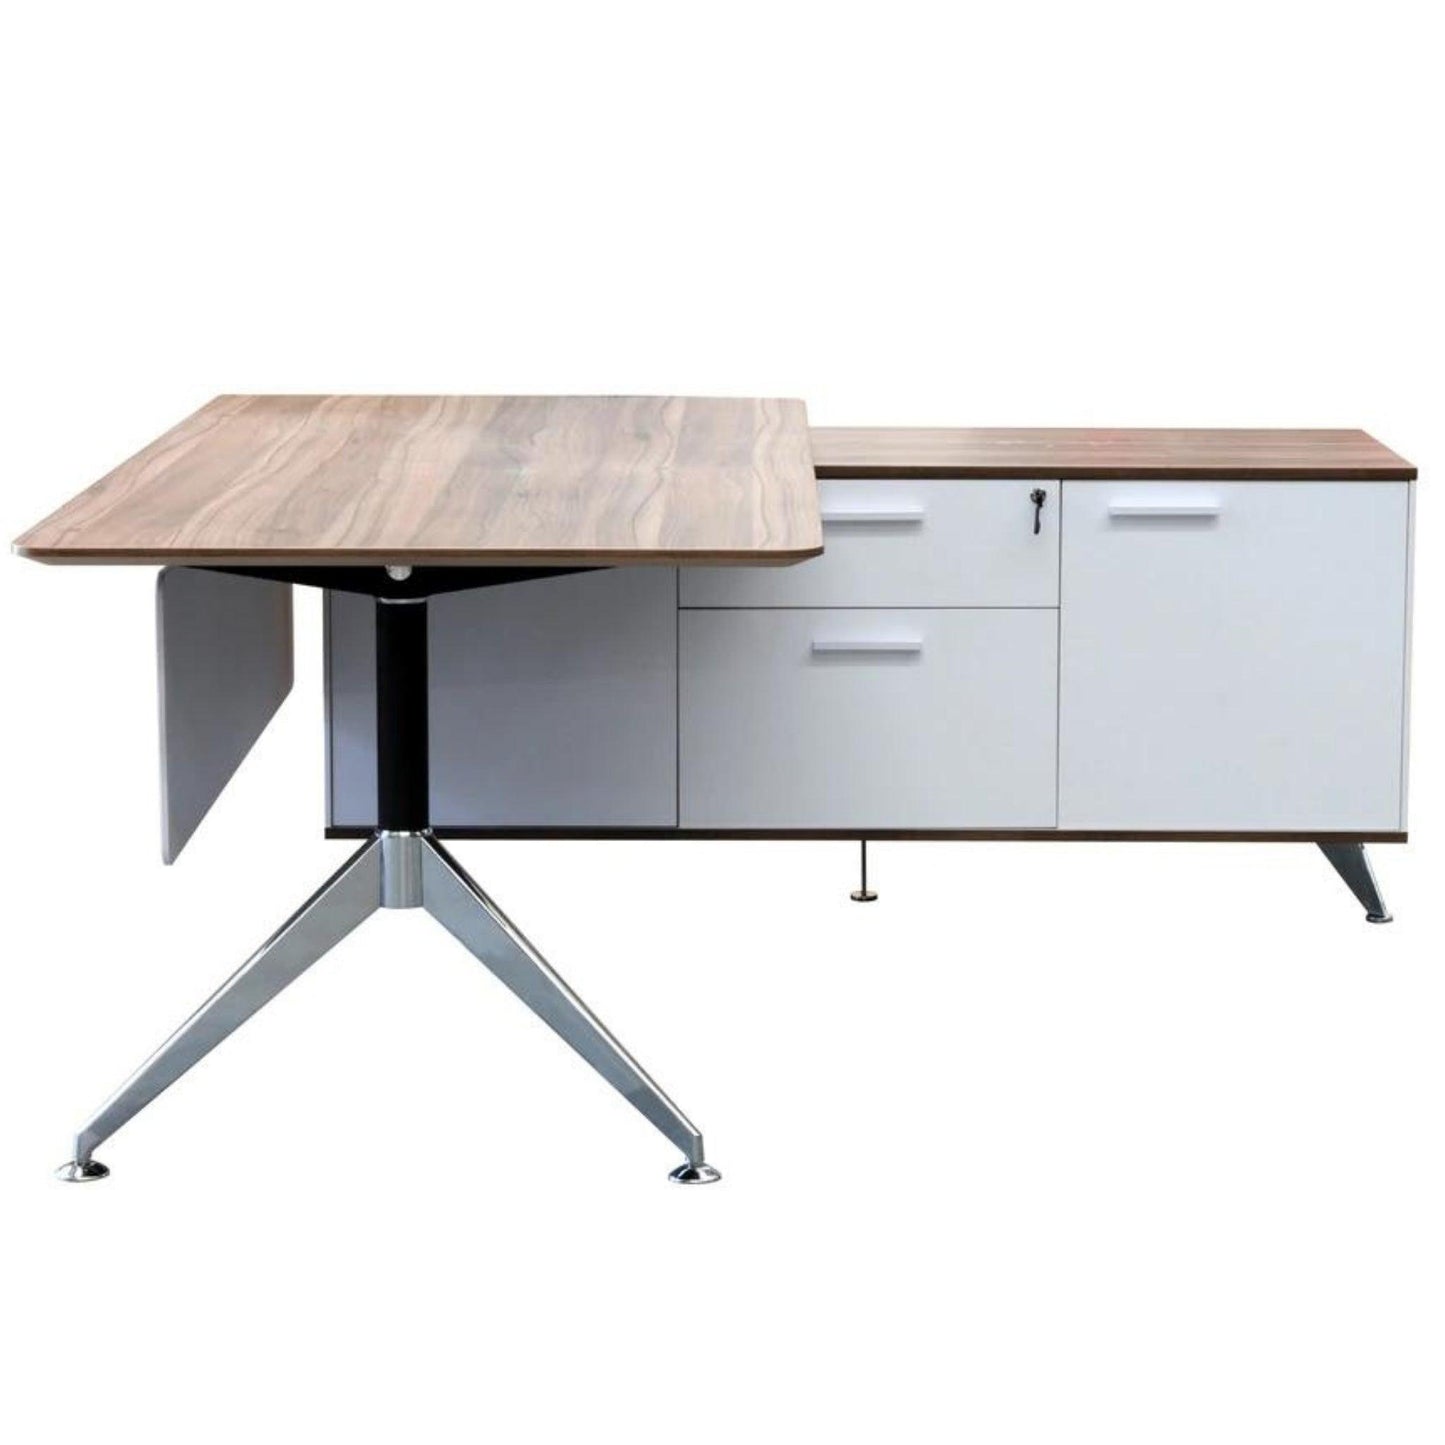 Potenza Desk With Return - Office Furniture Company 